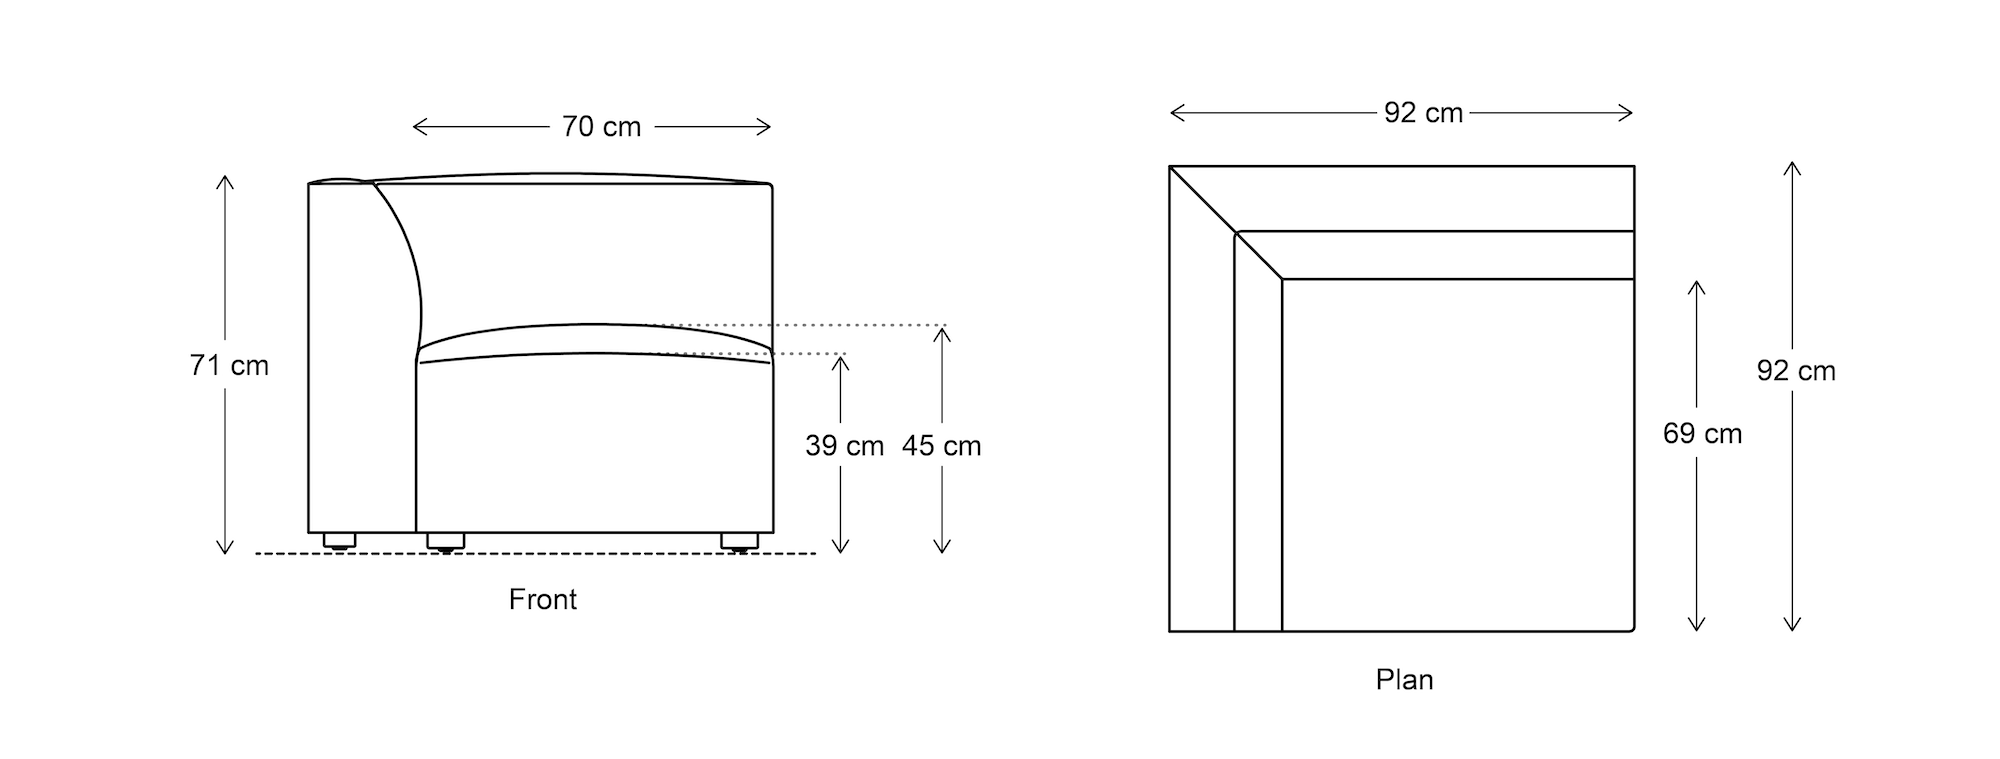 modular corner module dimensions